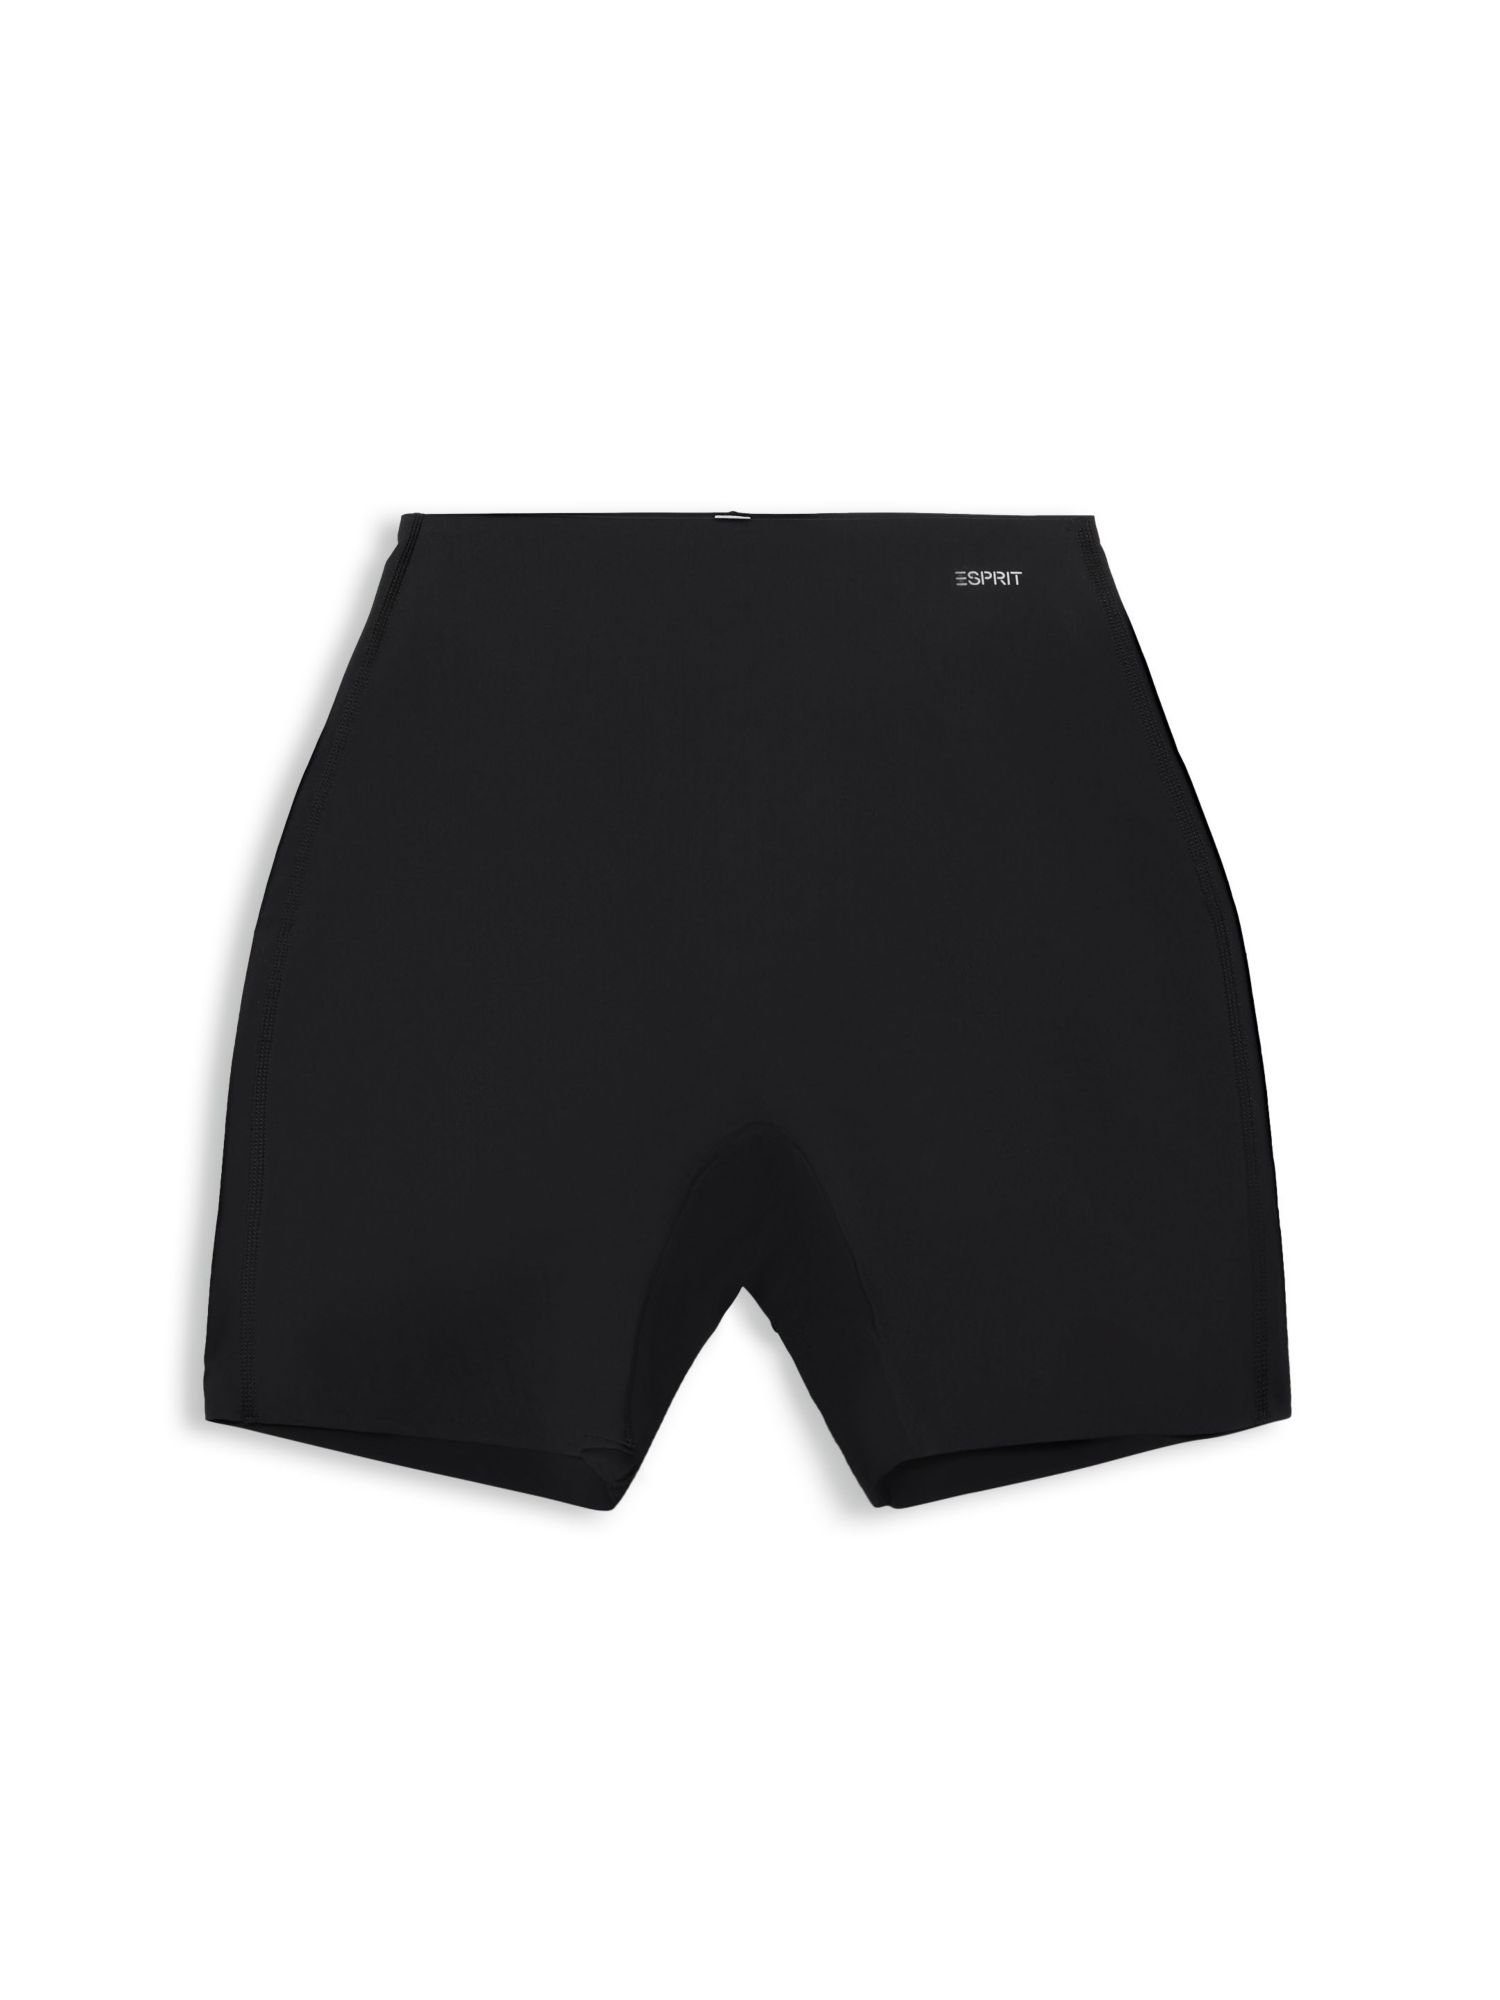 Esprit Hipster BLACK Shorts mit Shaping-Effekt Recycelt: dezentem